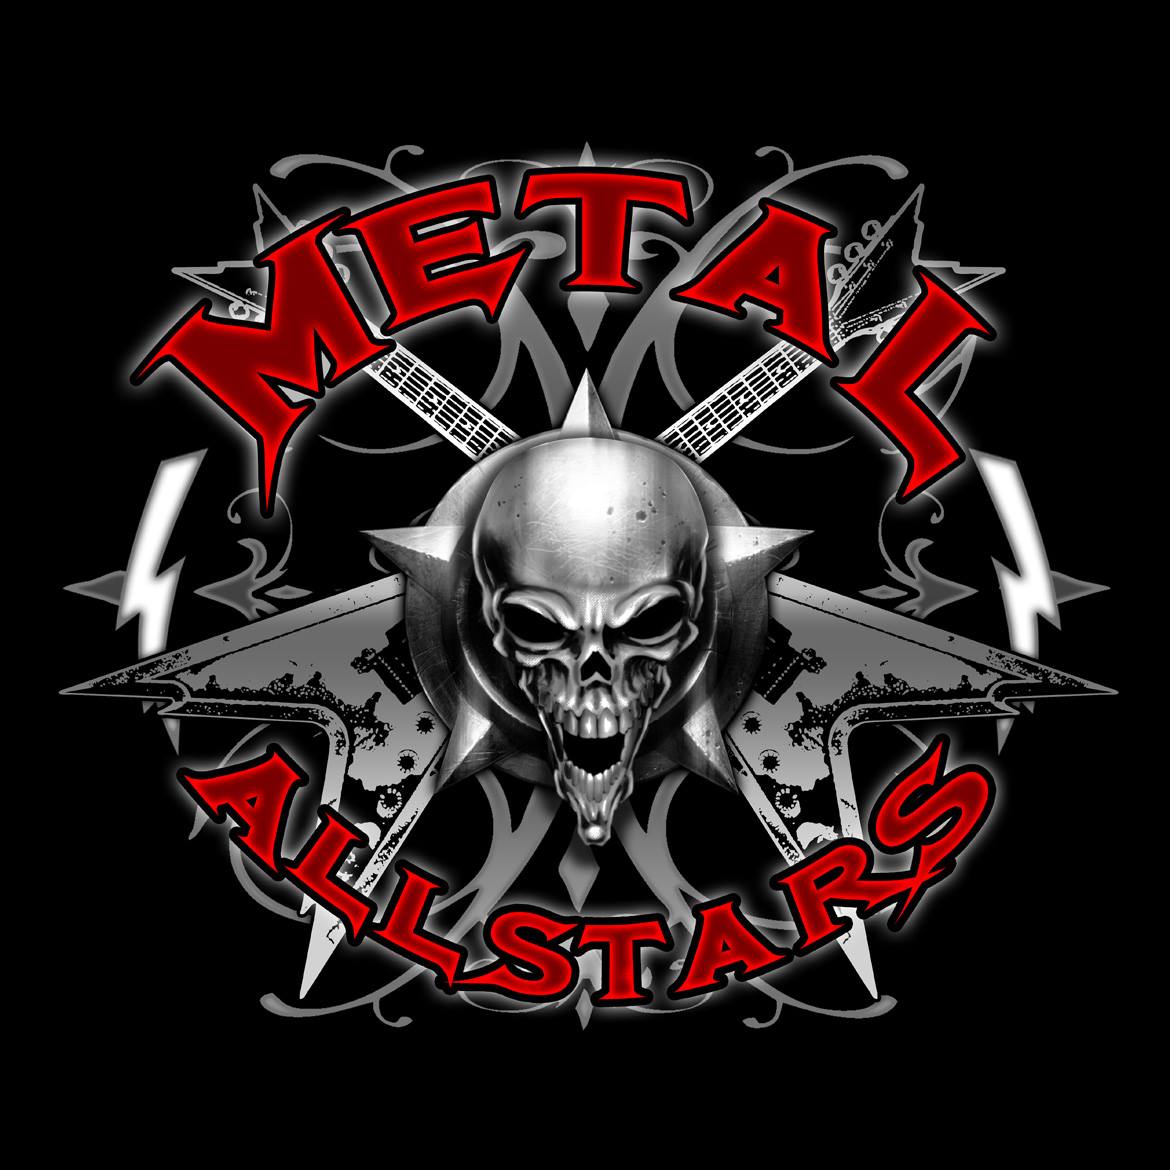 Металл про групп. Хеви метал логотип. Эмблема тяжелого рока. Тяжёлый рок металл. Символы металл групп.